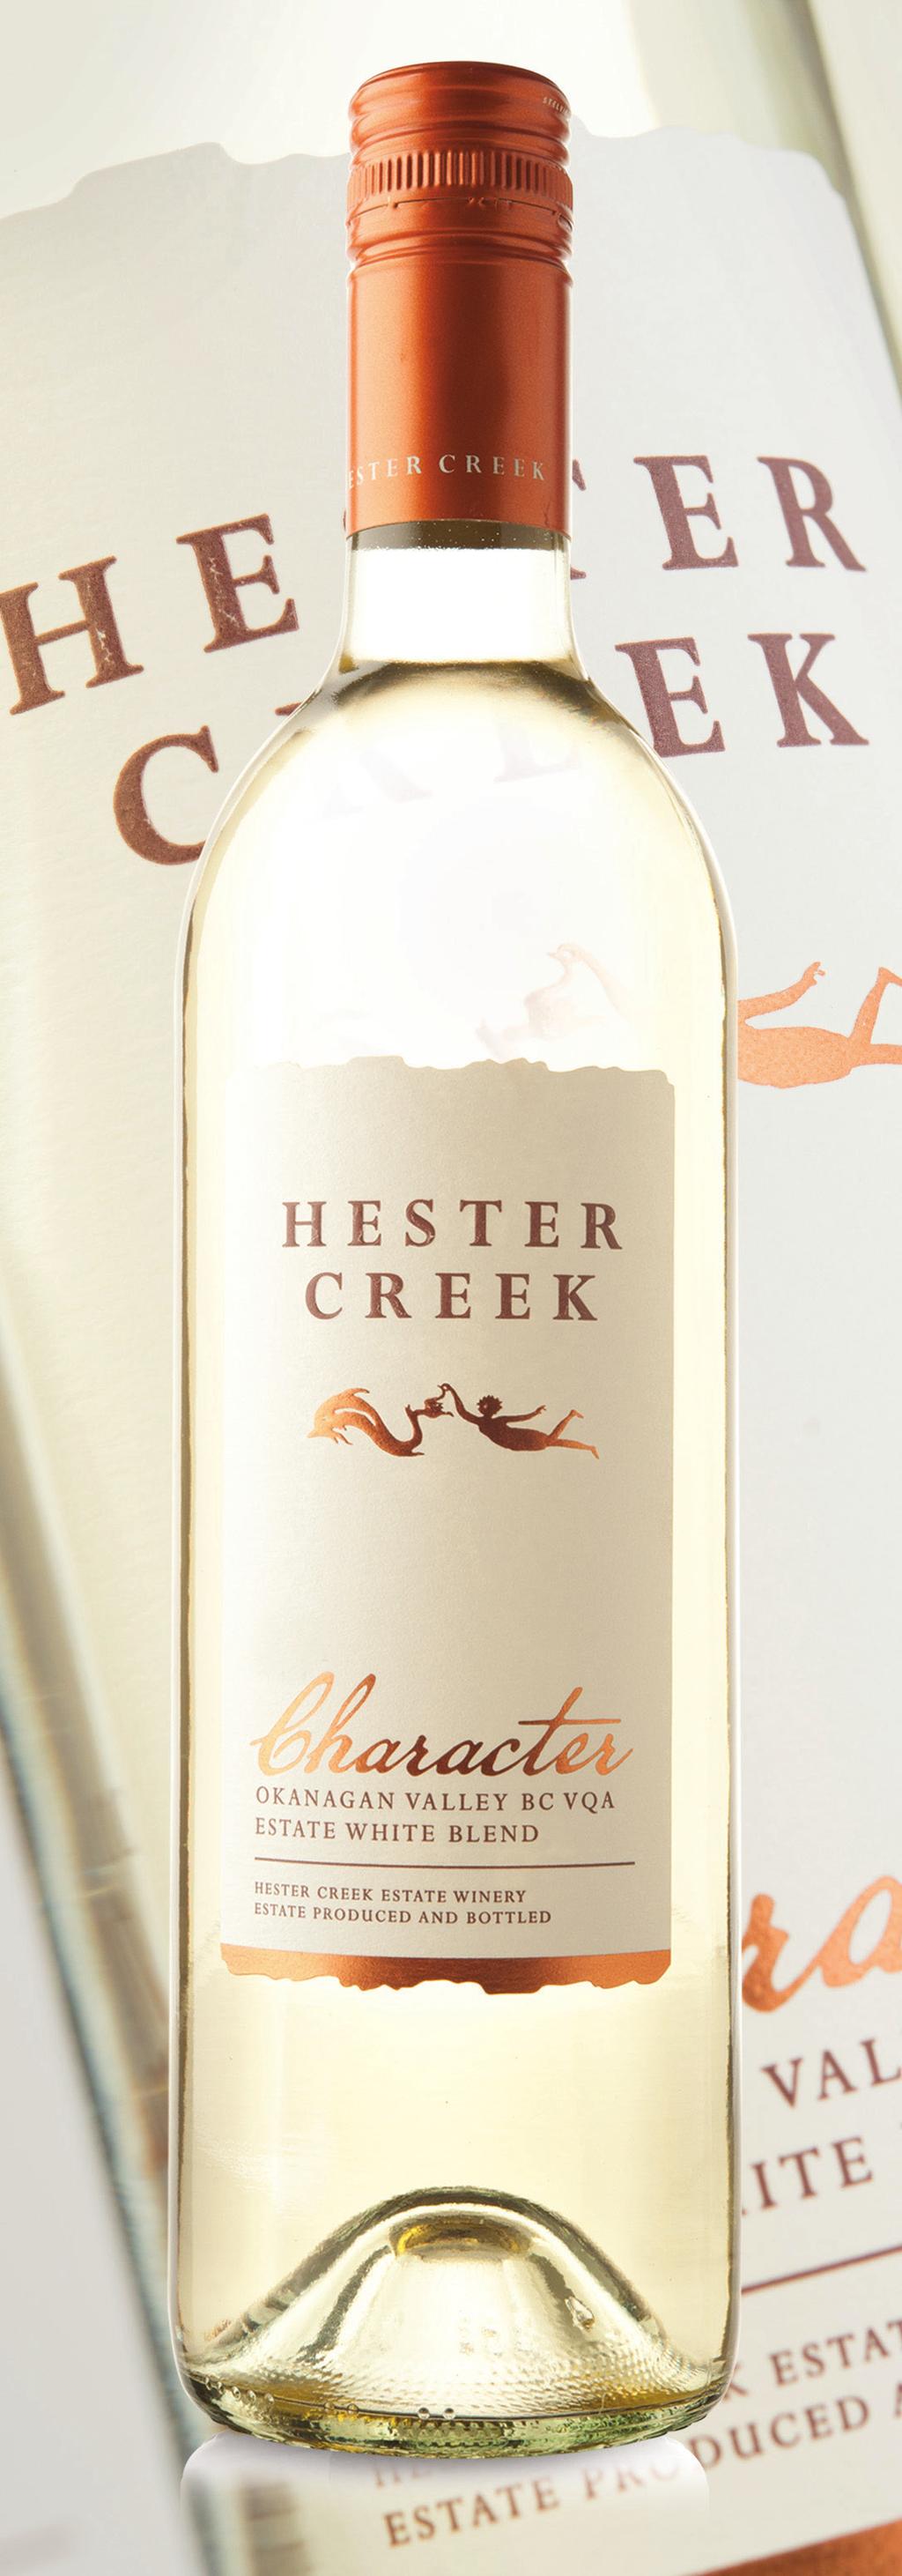 Hester Creek Estate Winery PO Box 1605, Oliver, British Columbia 1.866.498.4435 info@hestercreek.com www.hestercreek.com Character White Price: $17.